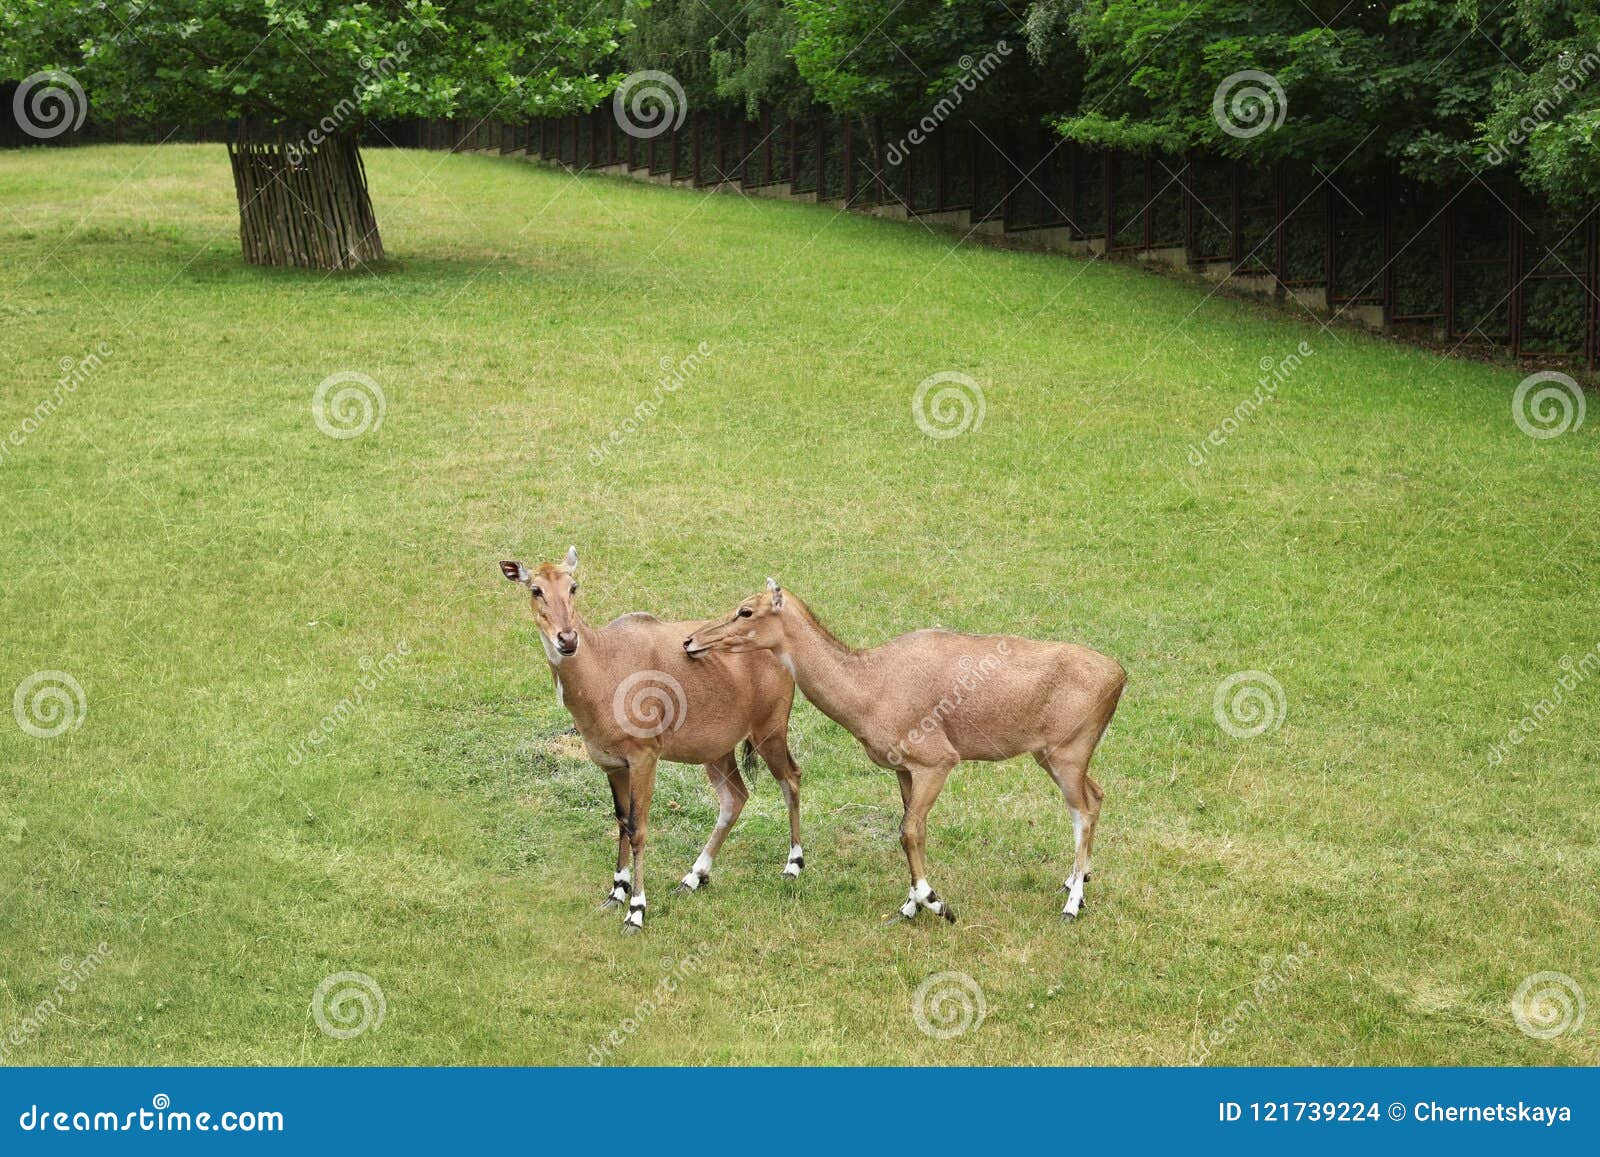 beautiful ungulate animals on green grass